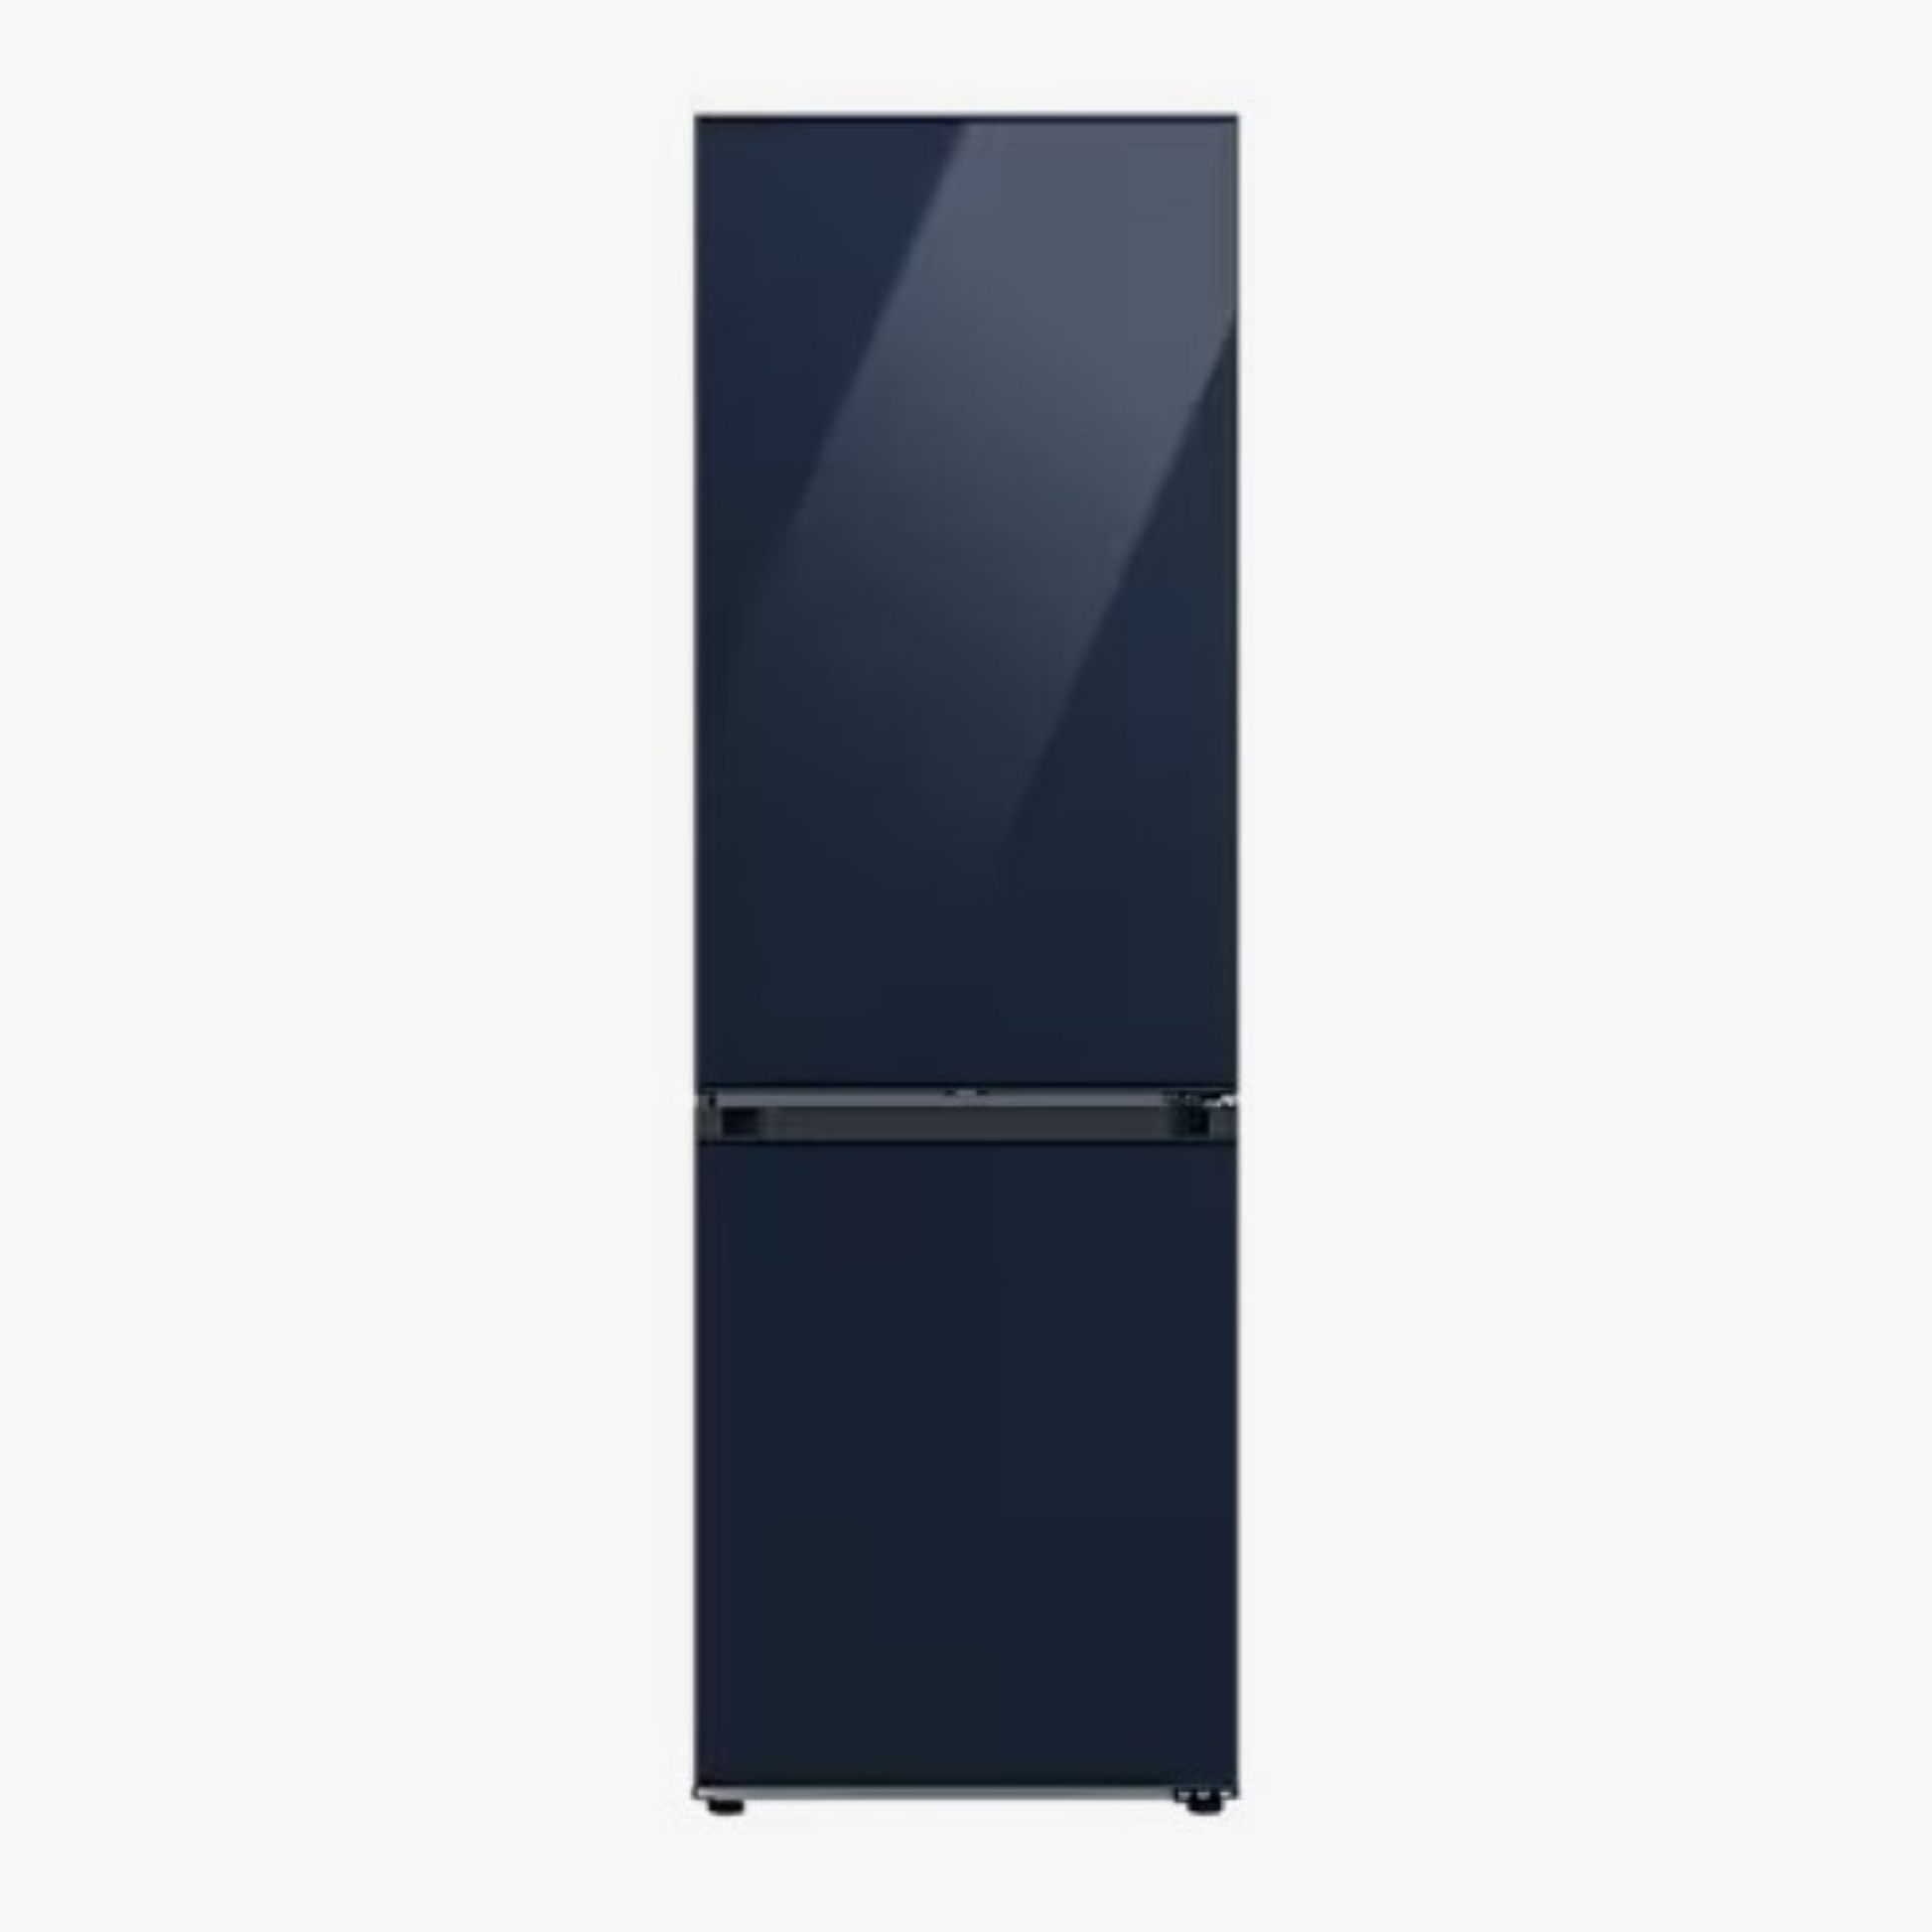 Samsung 344L Refrigerator, RB34A7B5D41